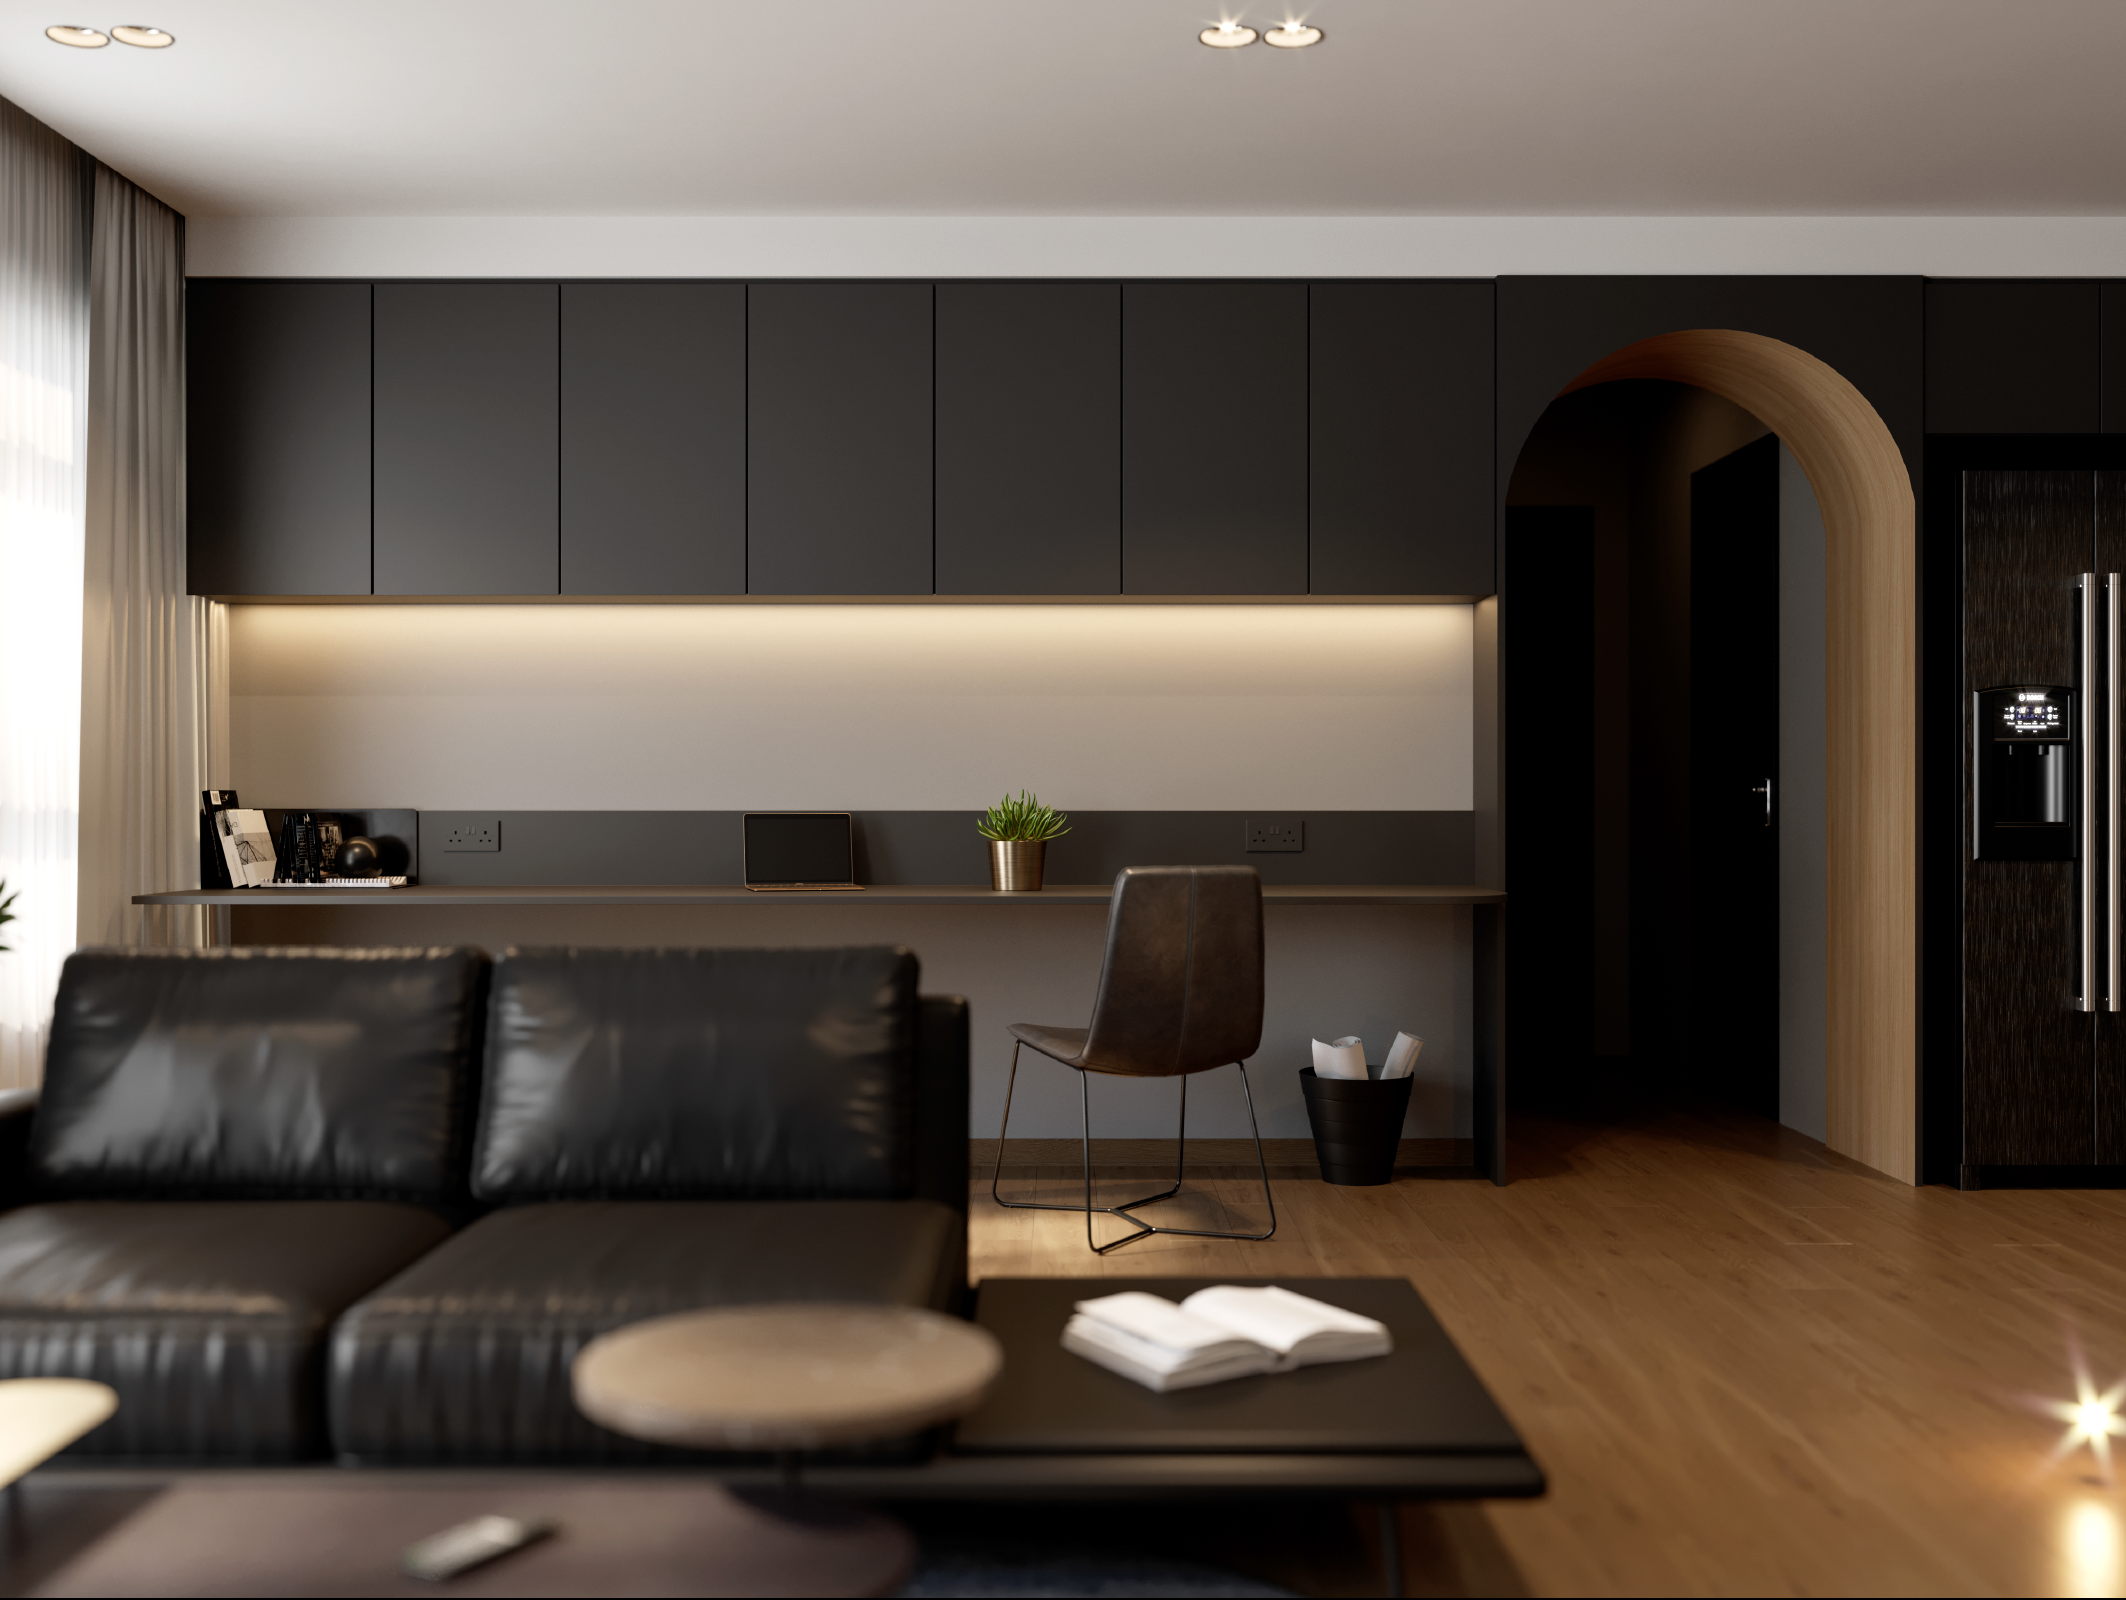 Introspective hue study area design by Arche Interior